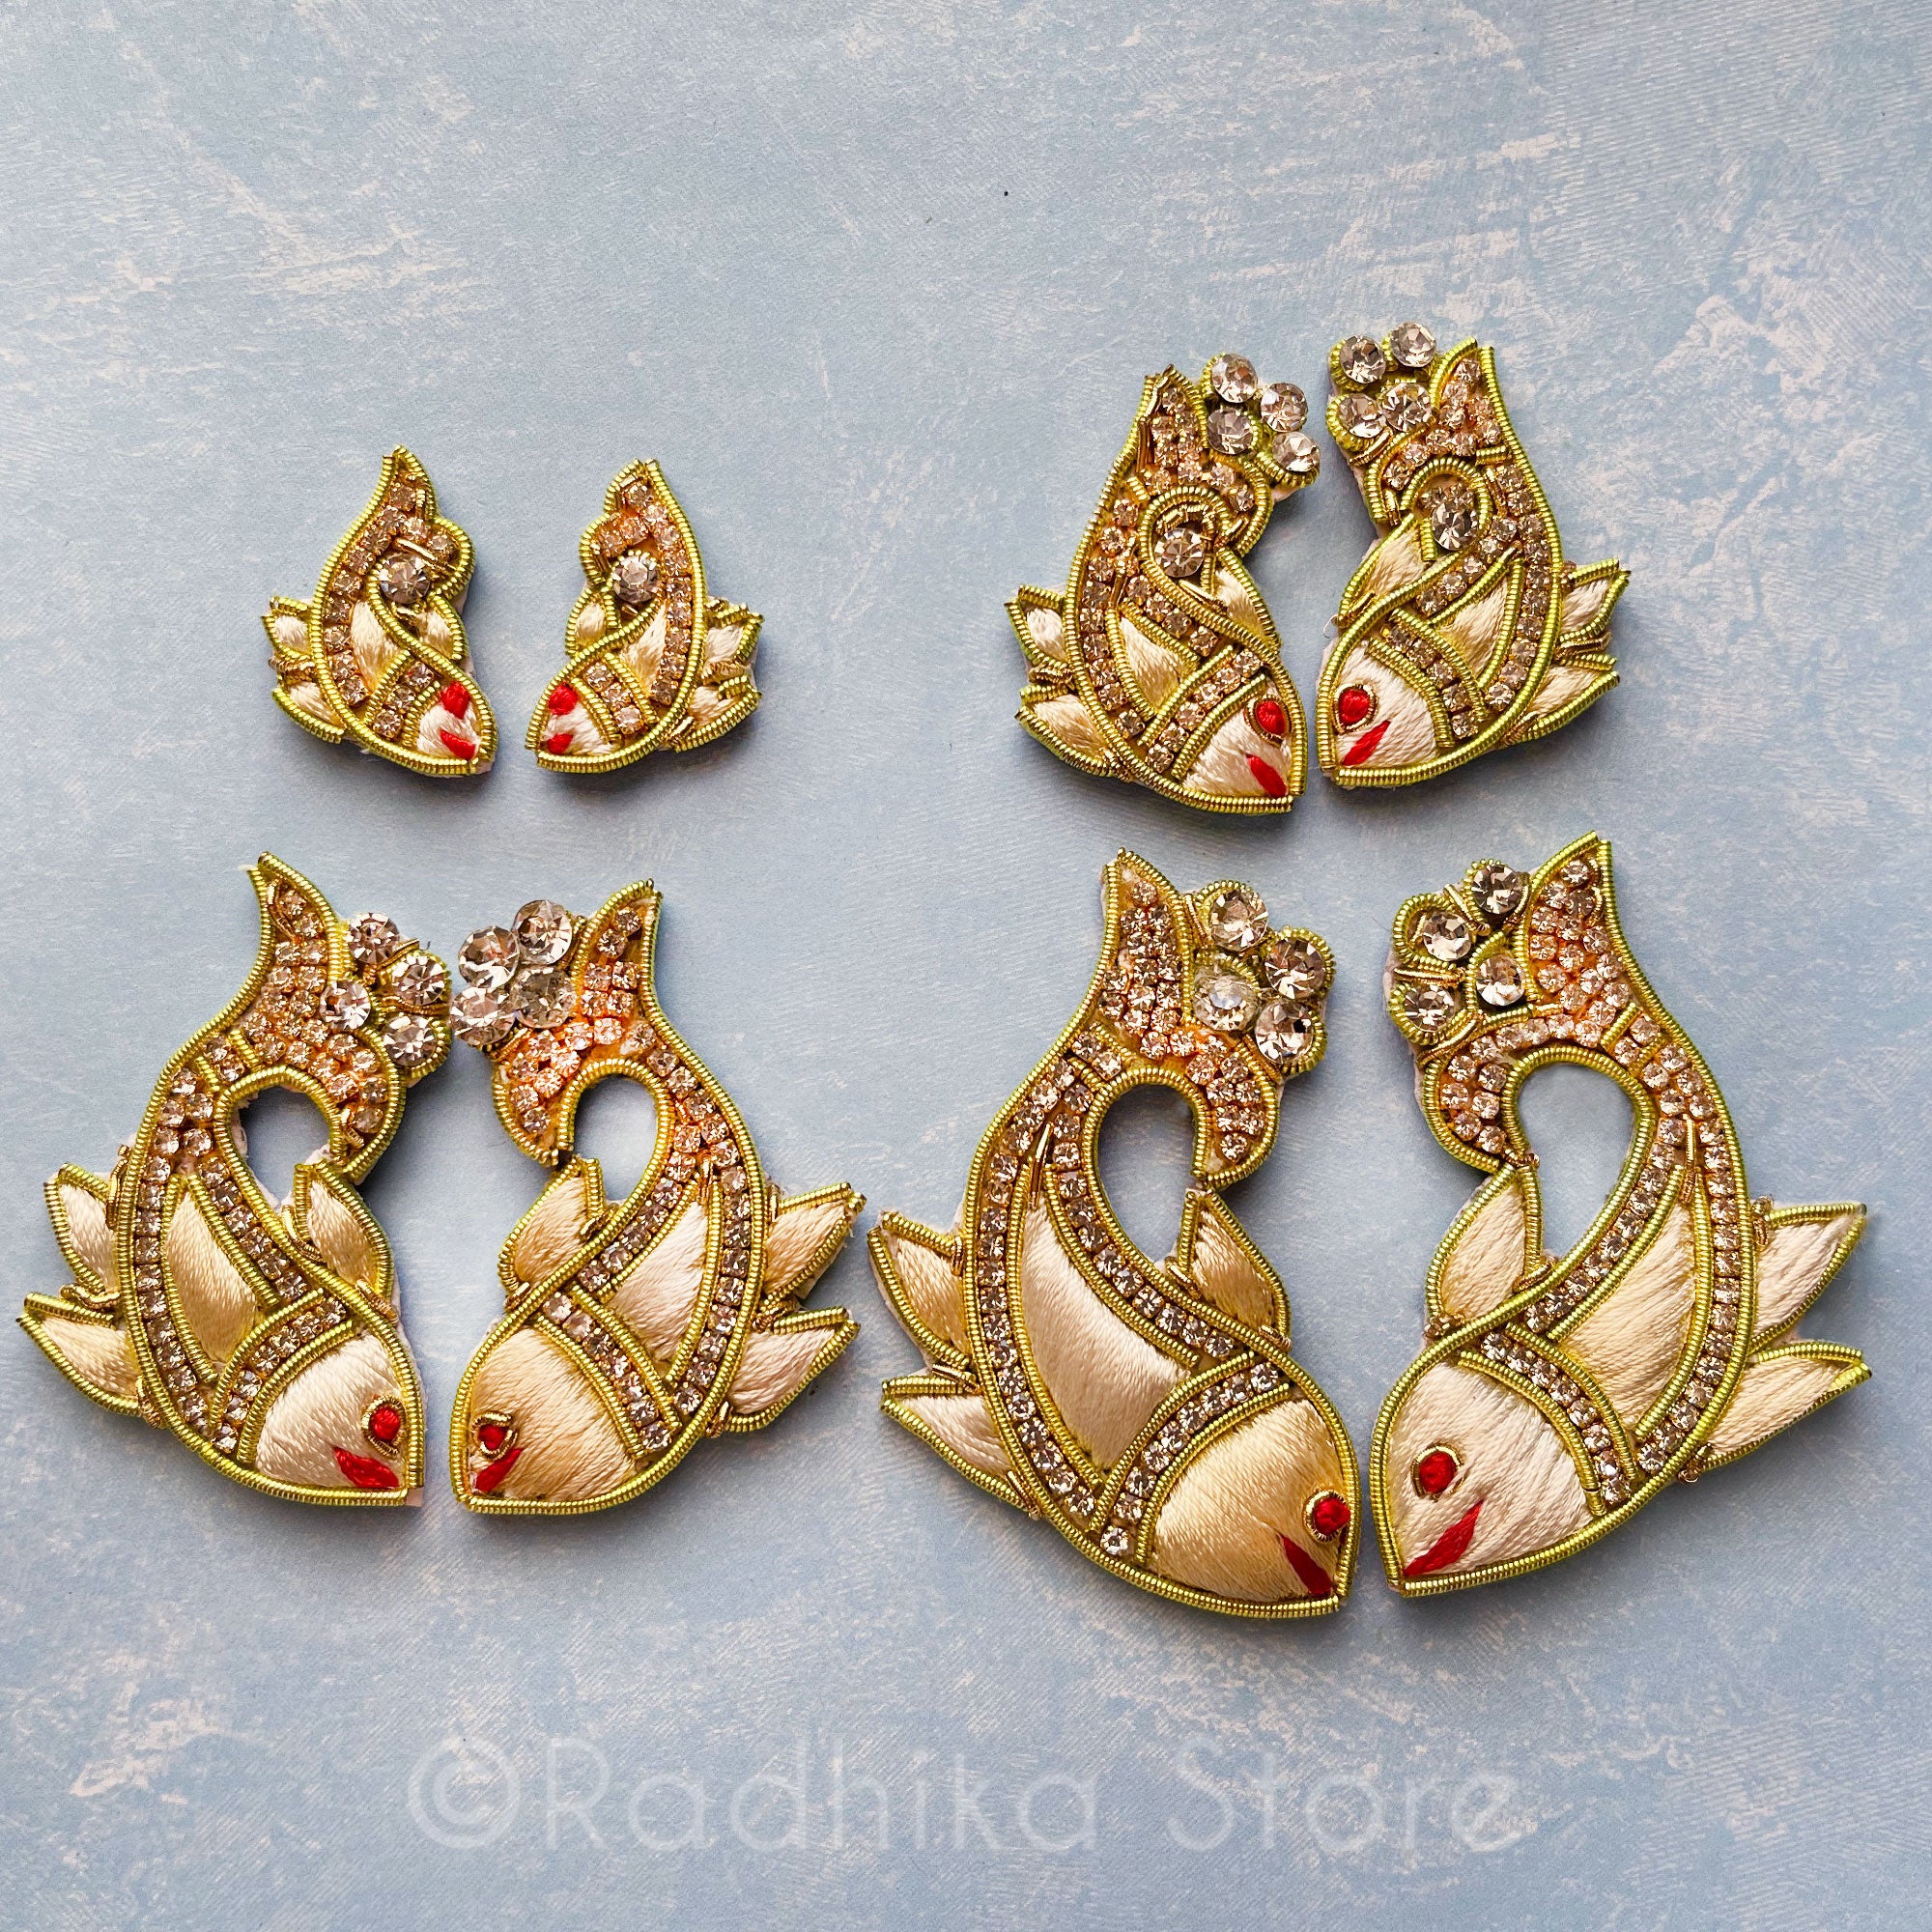 Light Golden - Matsya Embroidery - Set of 2 Turban Pins/Earrings